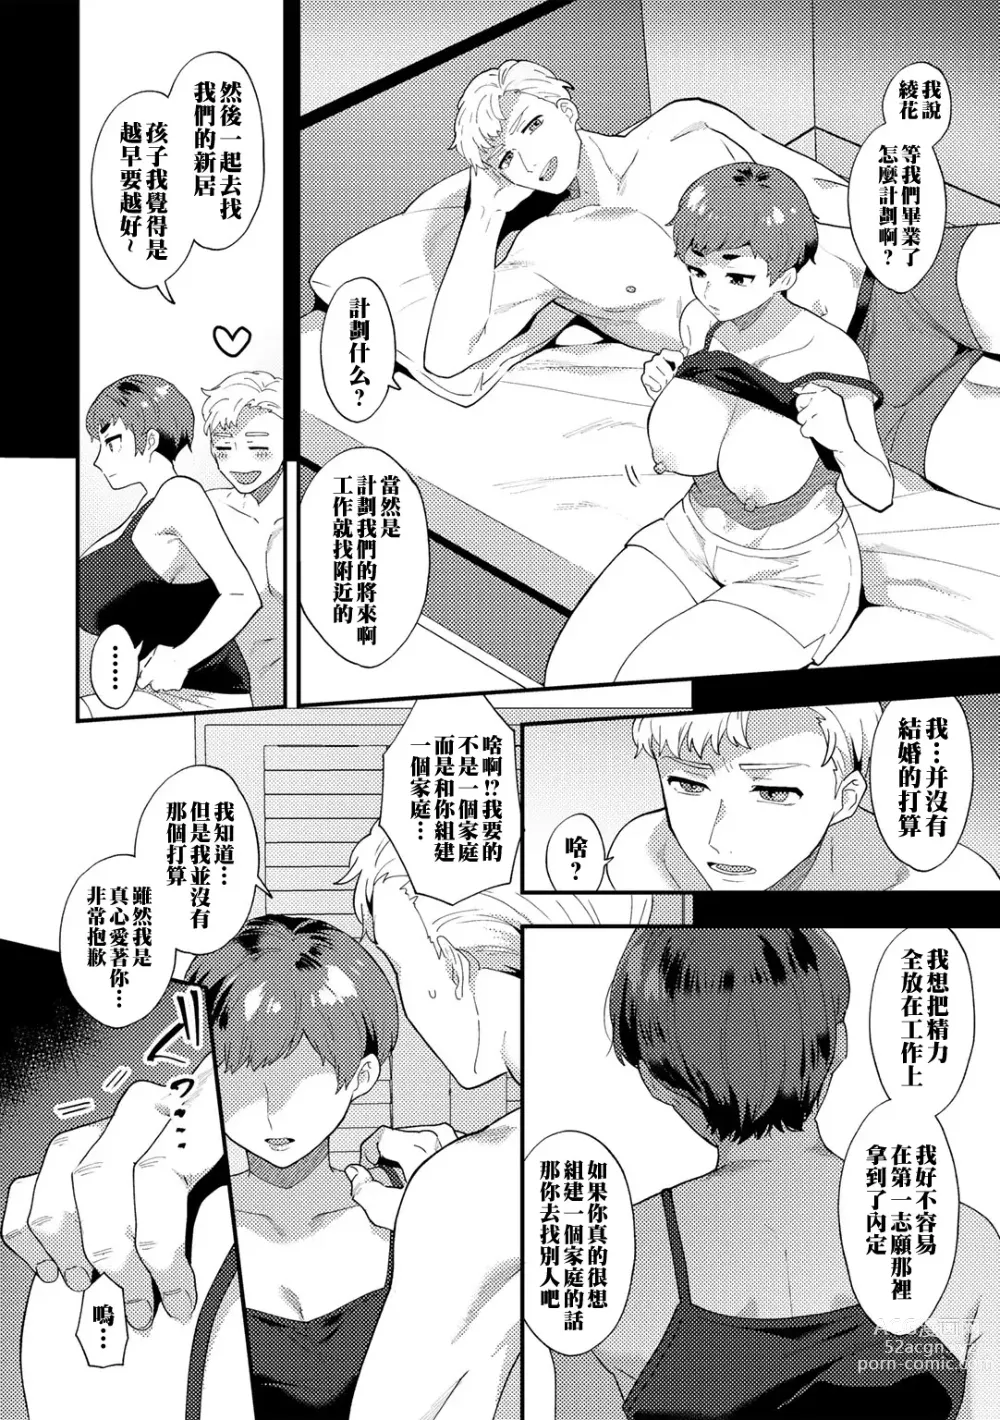 Page 16 of manga Anata sae Ireba... - If there is you...